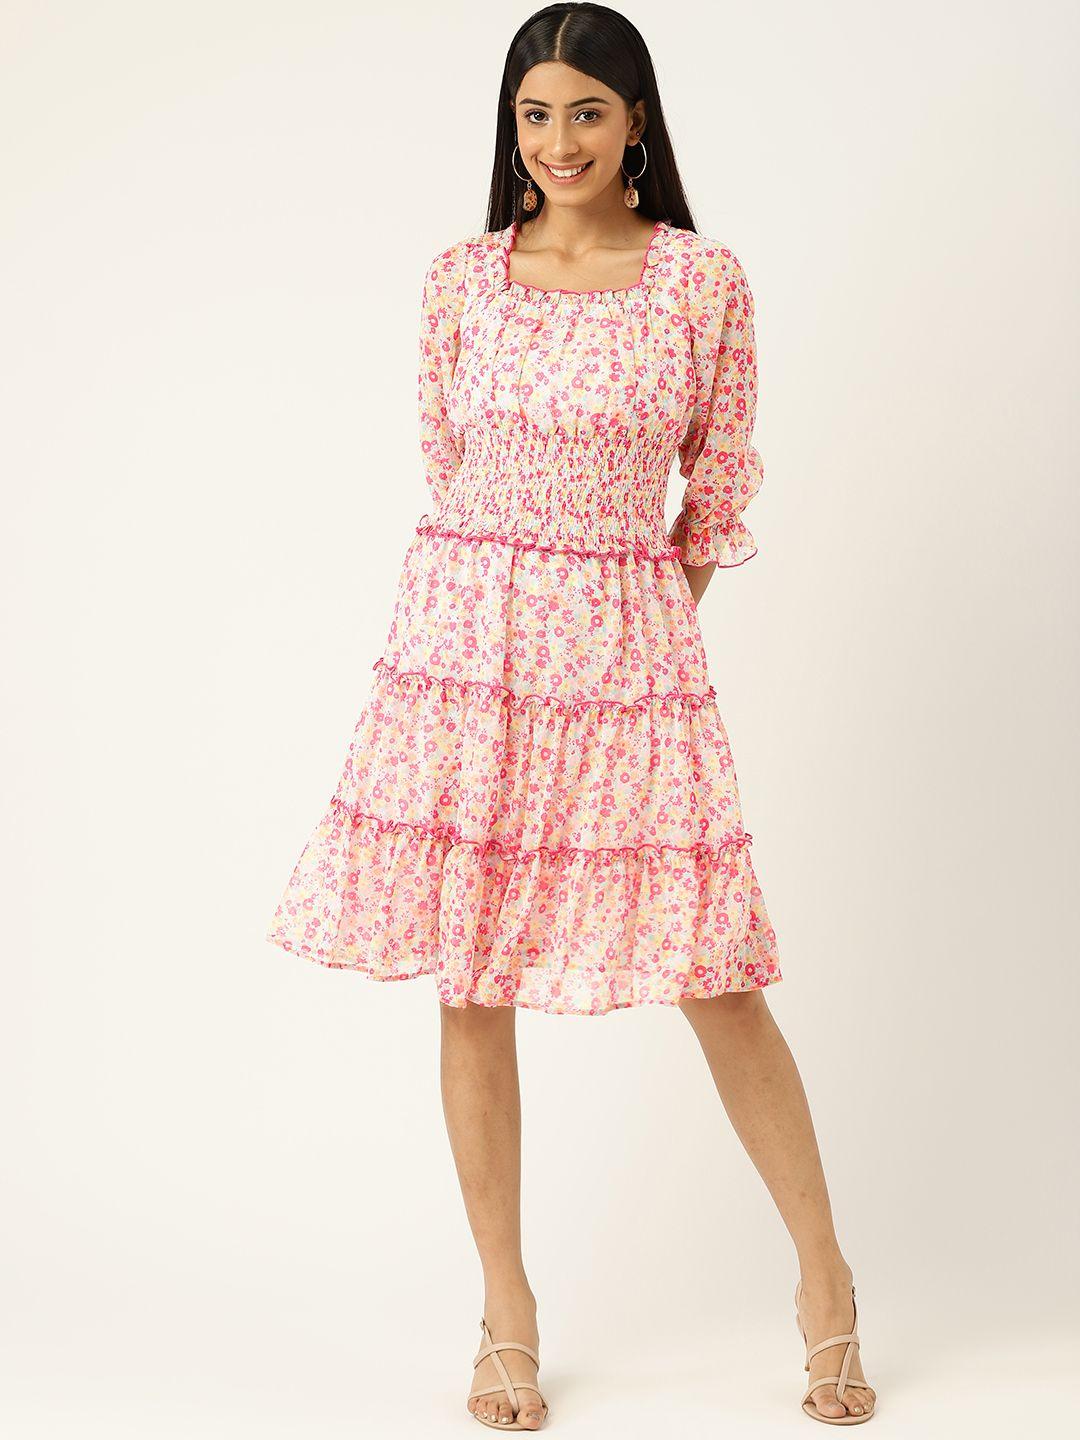 antheaa-women-white-&-pink-floral-printed-chiffon-a-line-dress